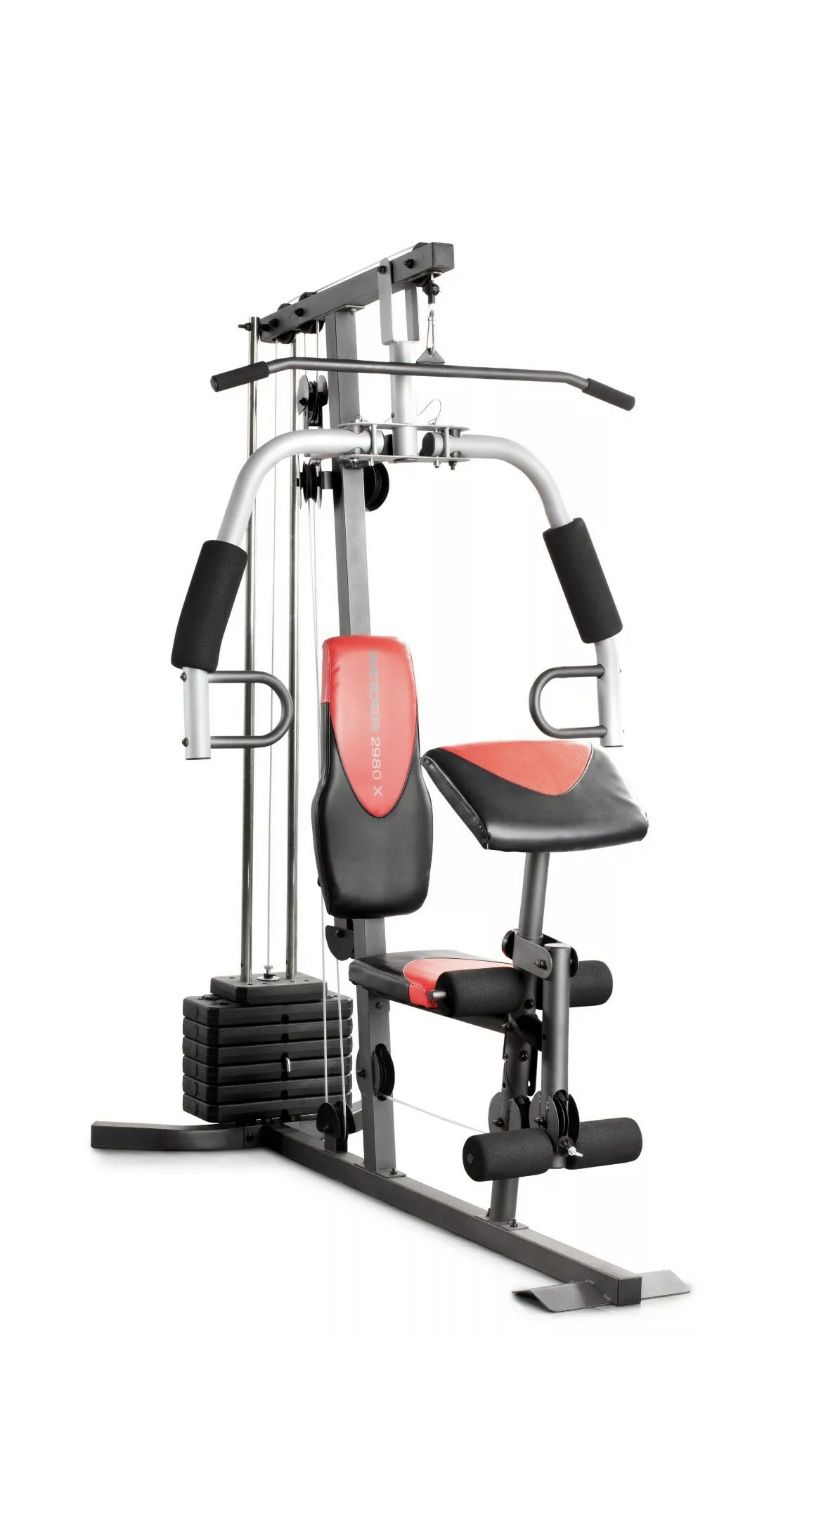 Weider Home Gym Equipment Exercise Workout Machine, 80 Lb Vinyl Weight | 2980 